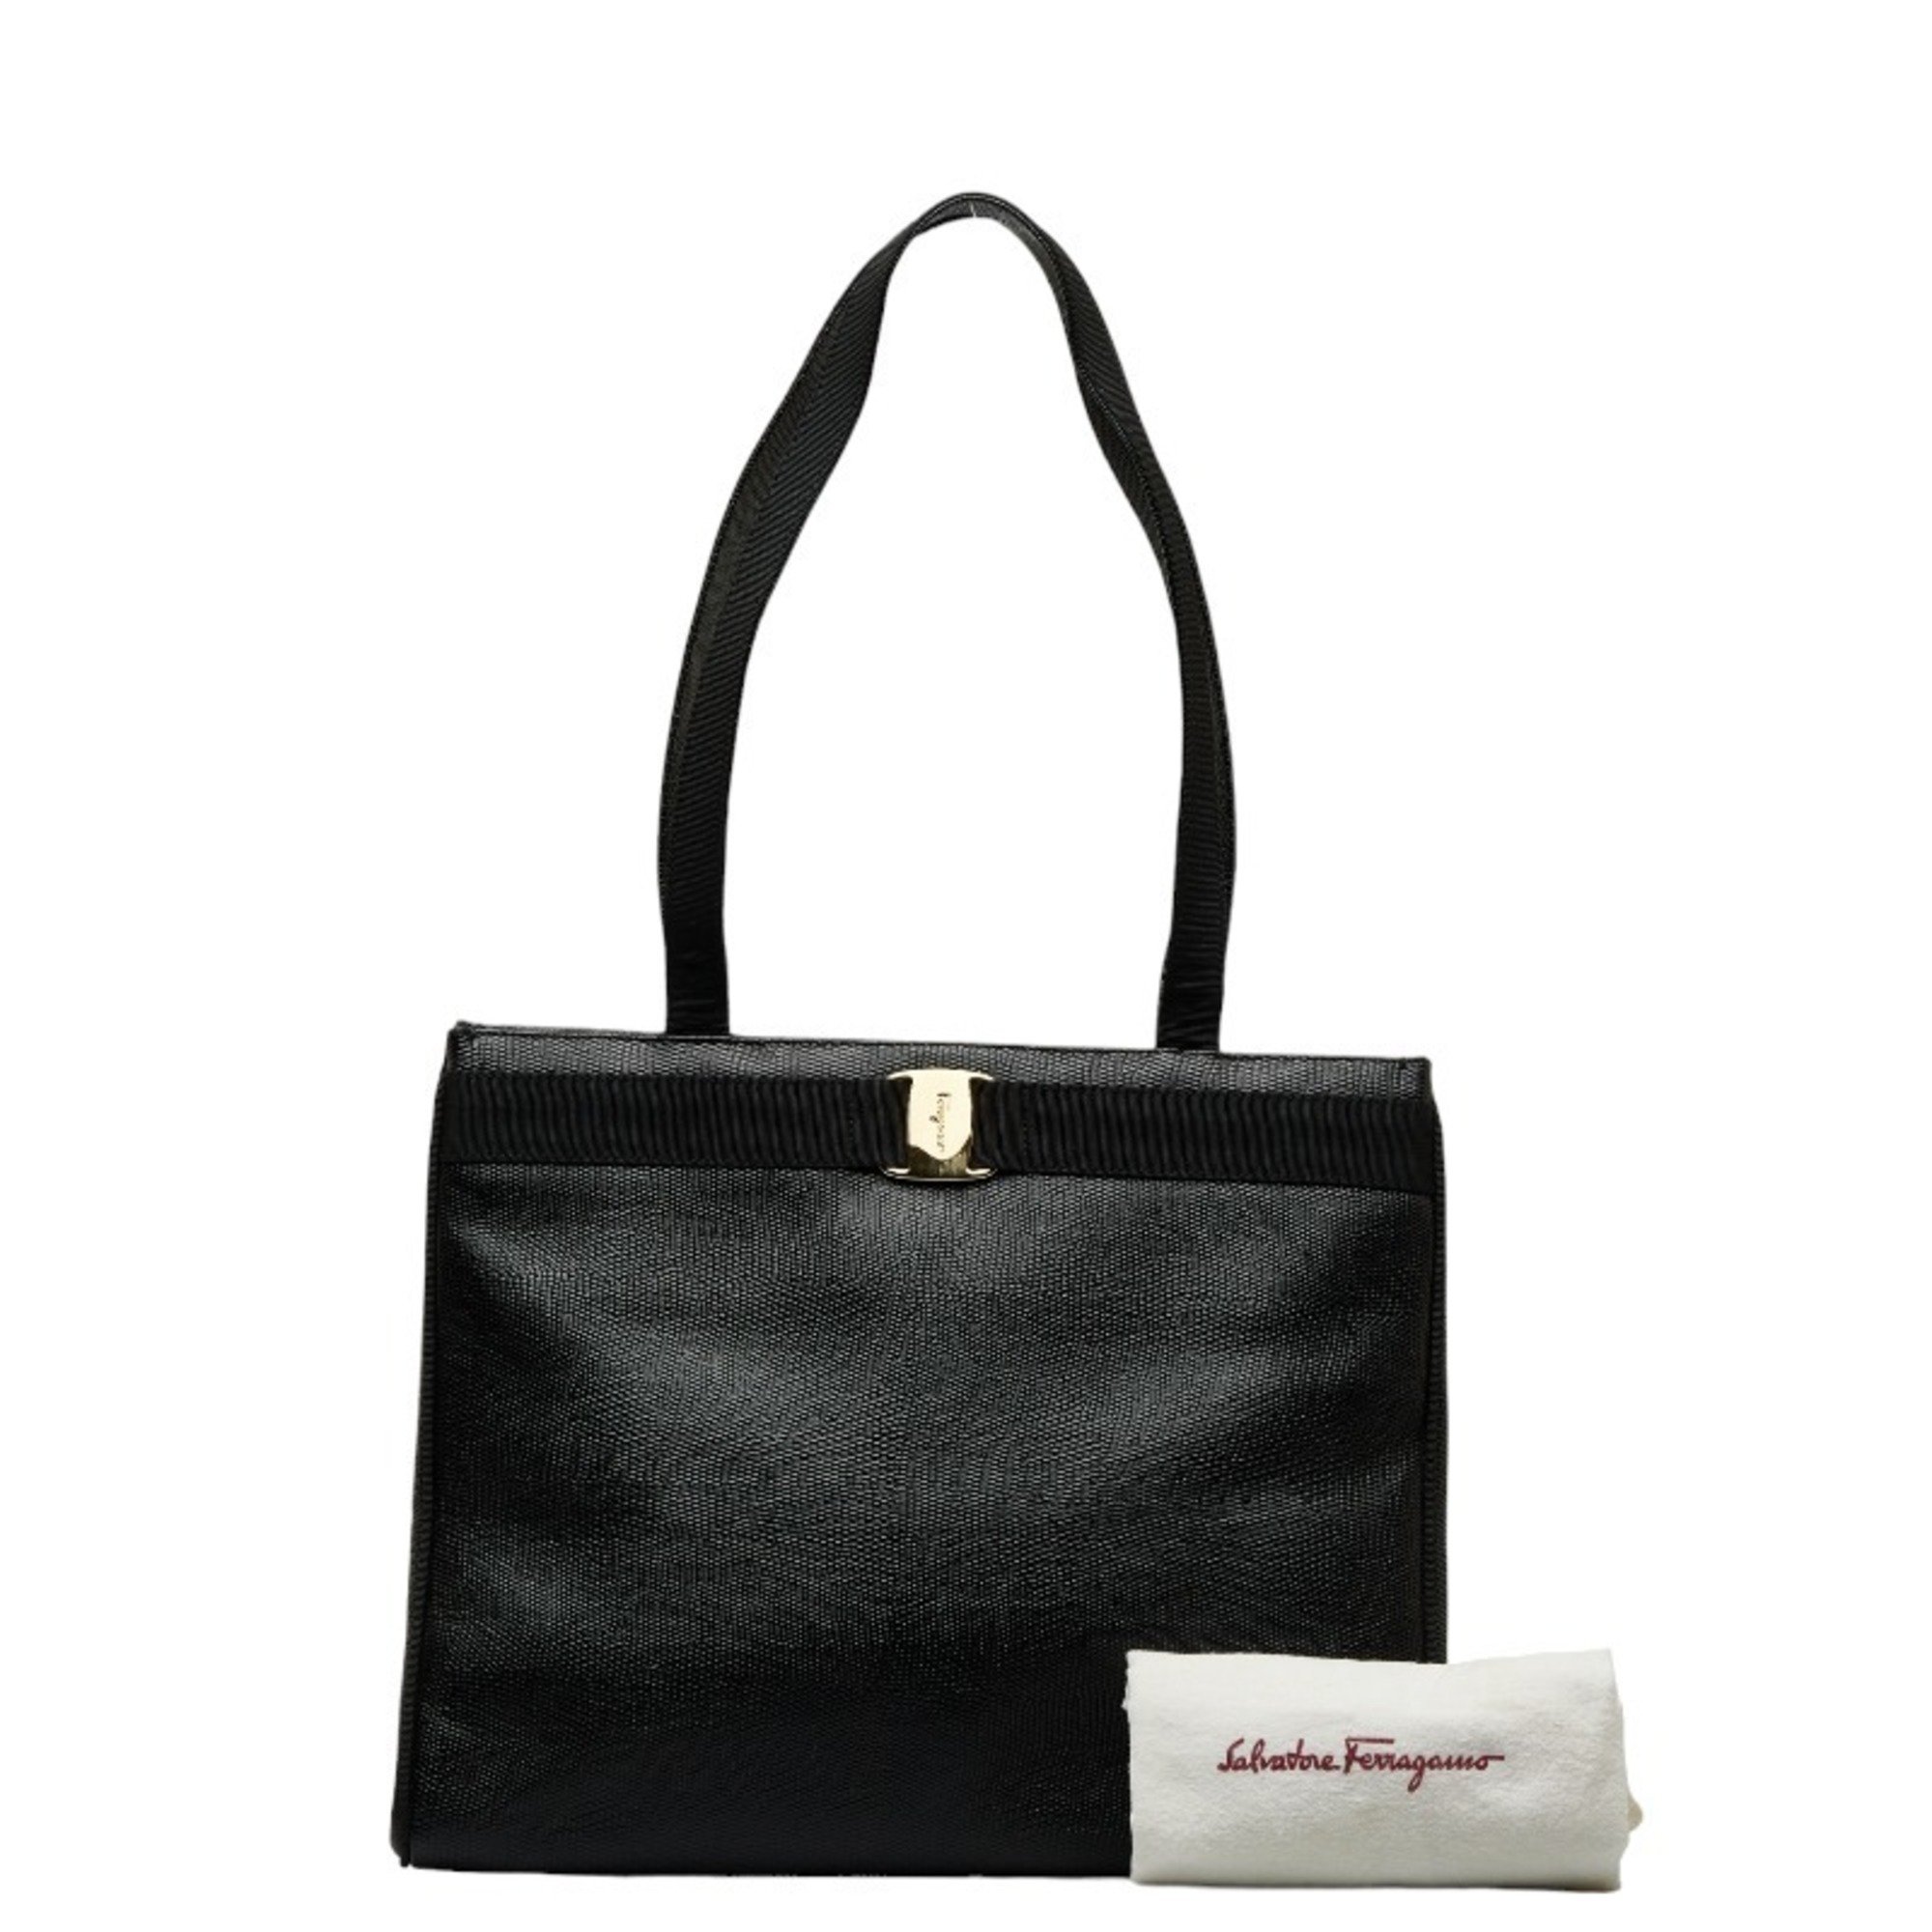 Salvatore Ferragamo Vara Tote Bag BK-21 2530 Black Leather Women's